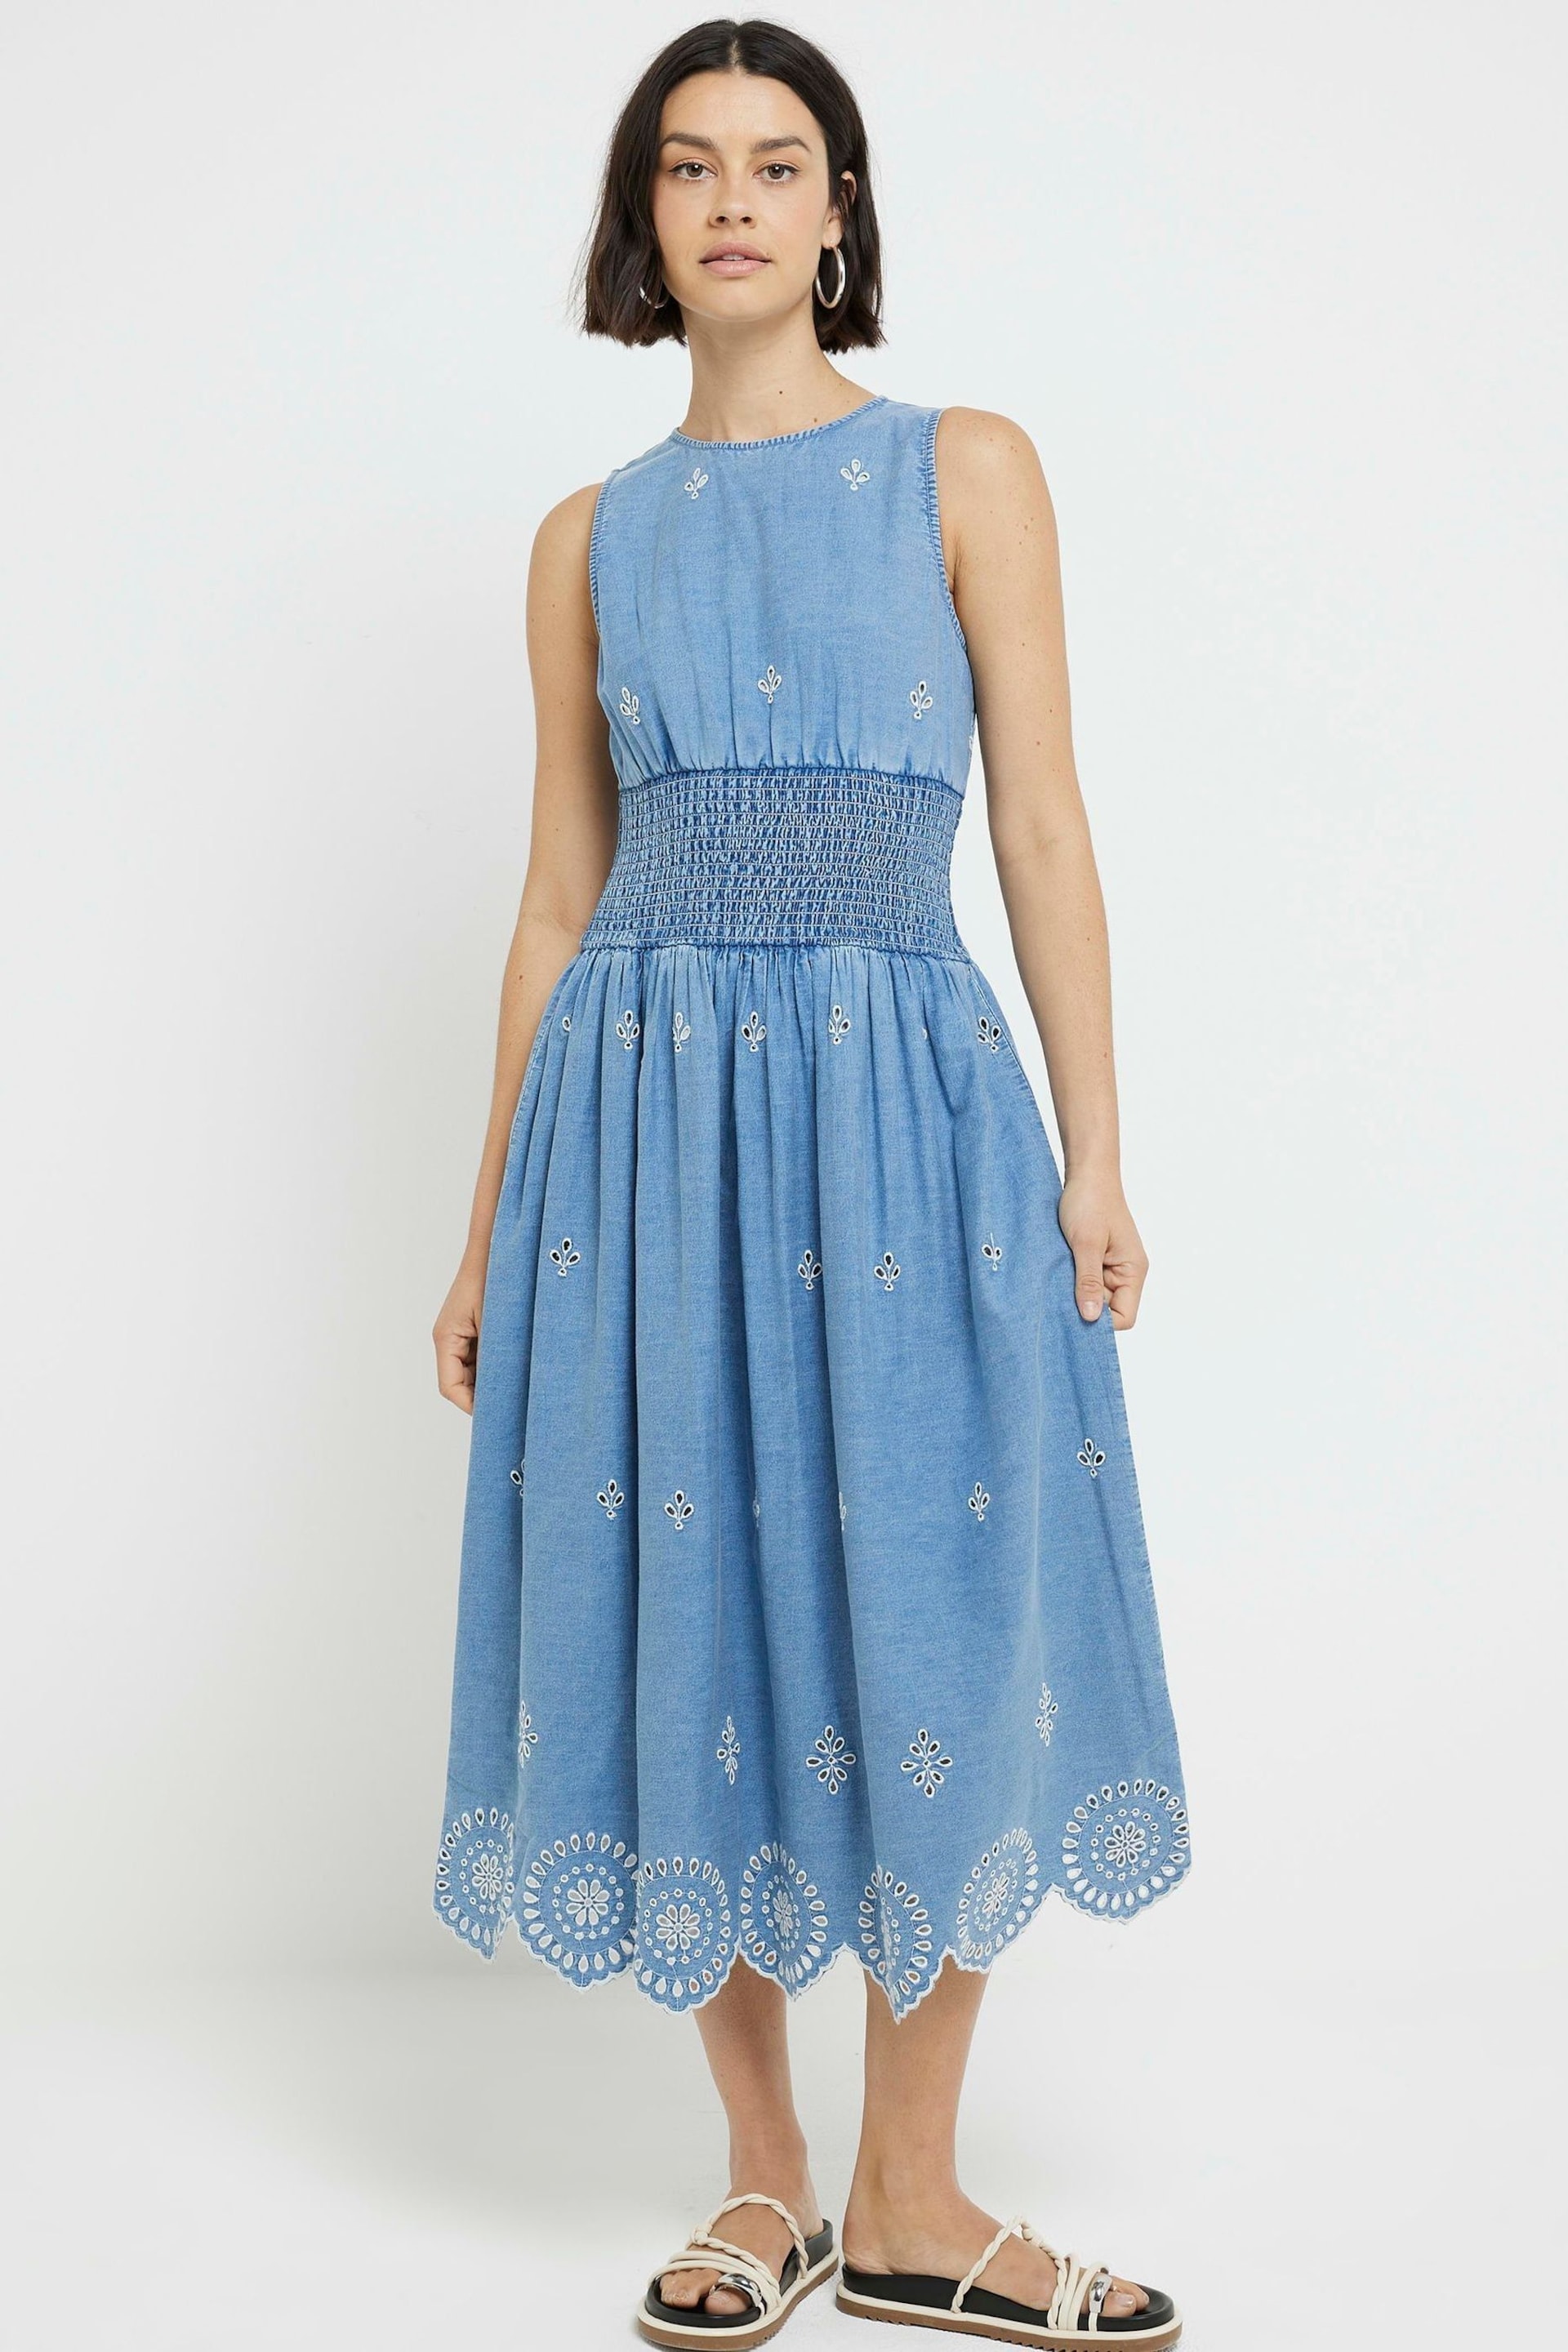 River Island Blue Waisted Denim Midi Dress - Image 1 of 4